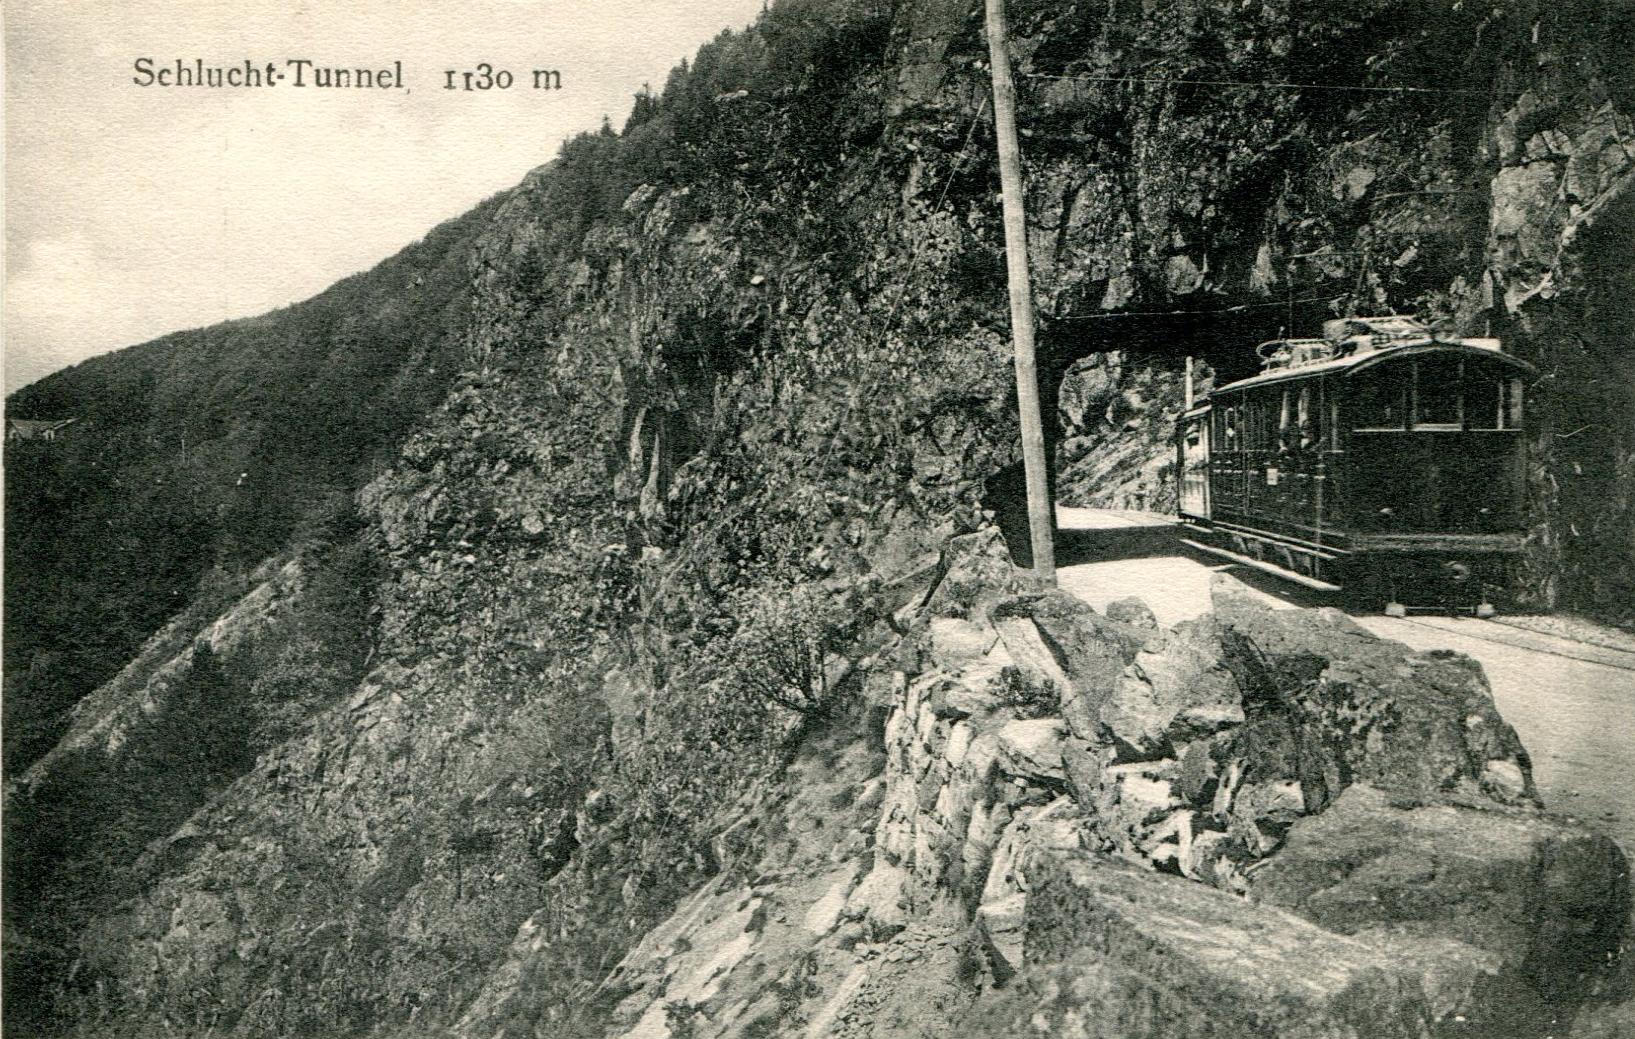 Tunnel de la Schlucht